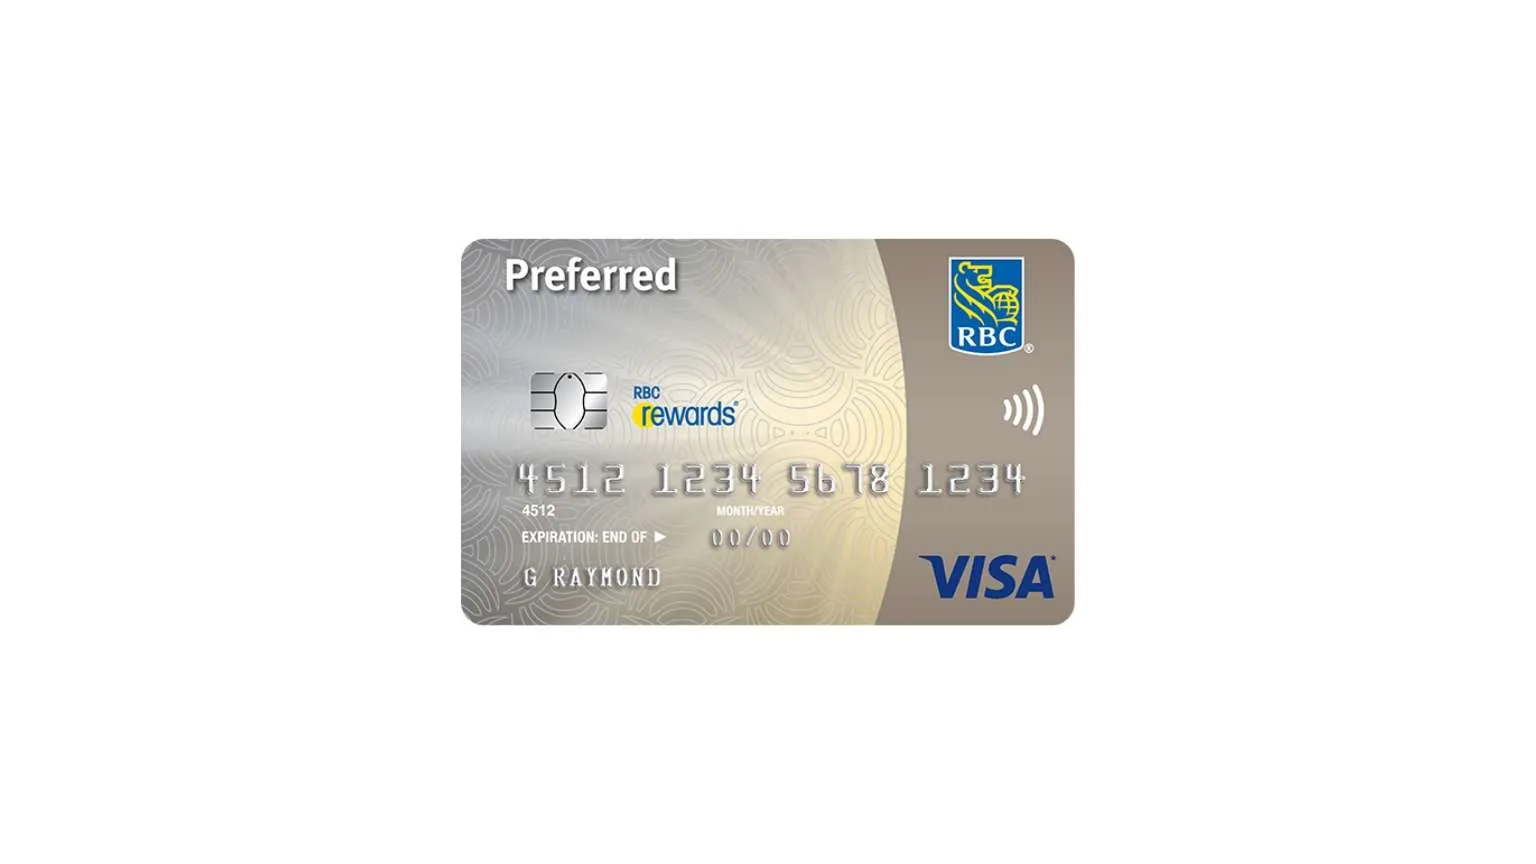 rbc travel insurance credit card